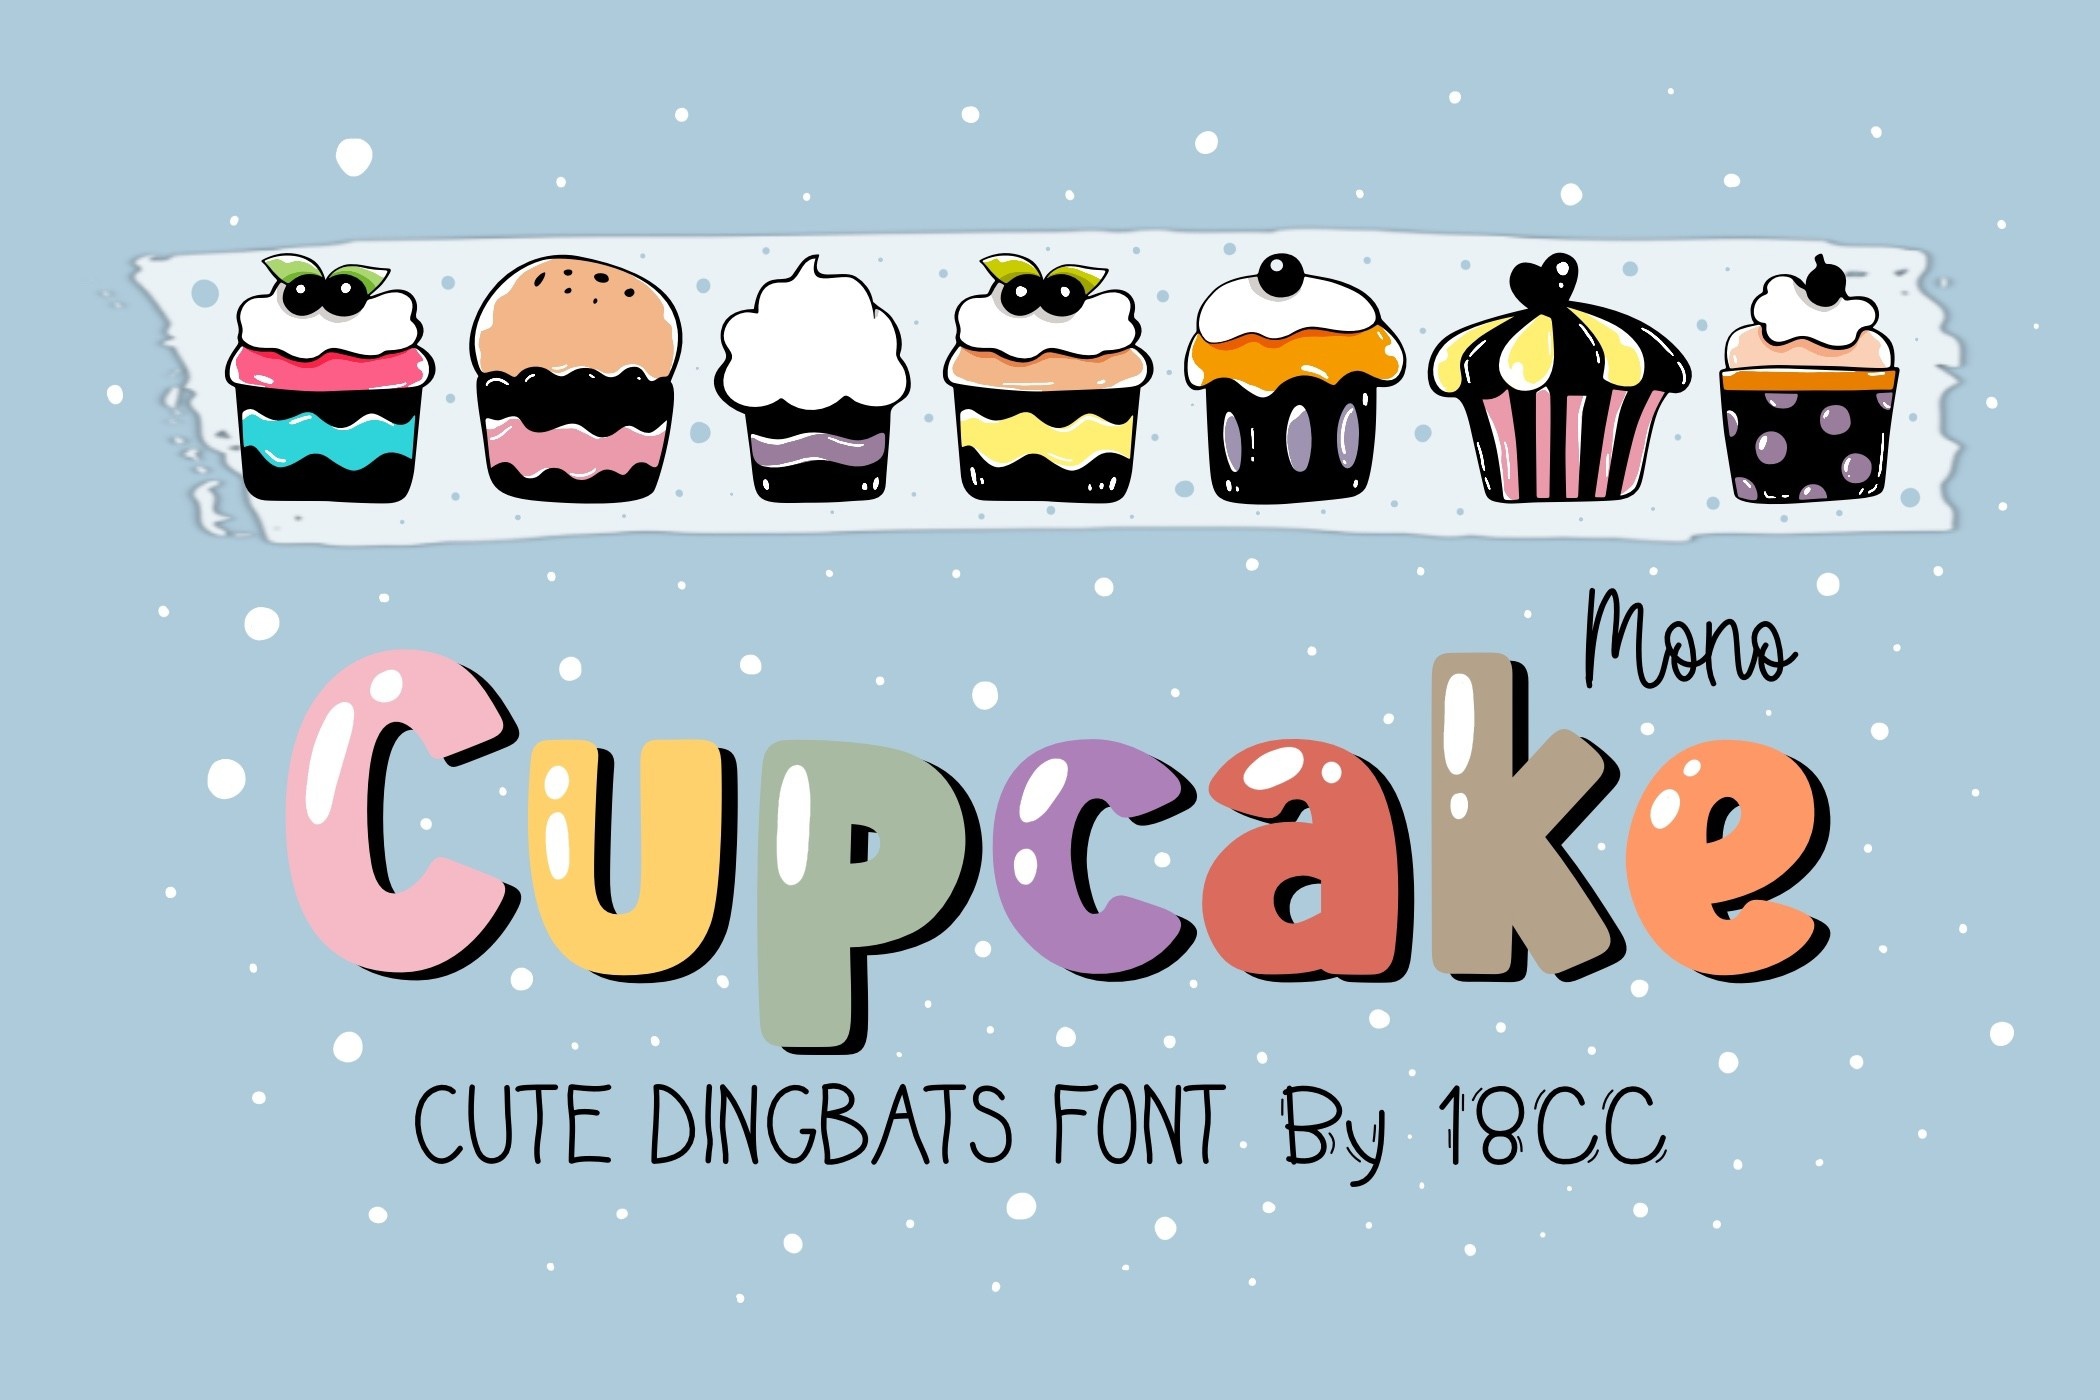 Font Mono Cupcake